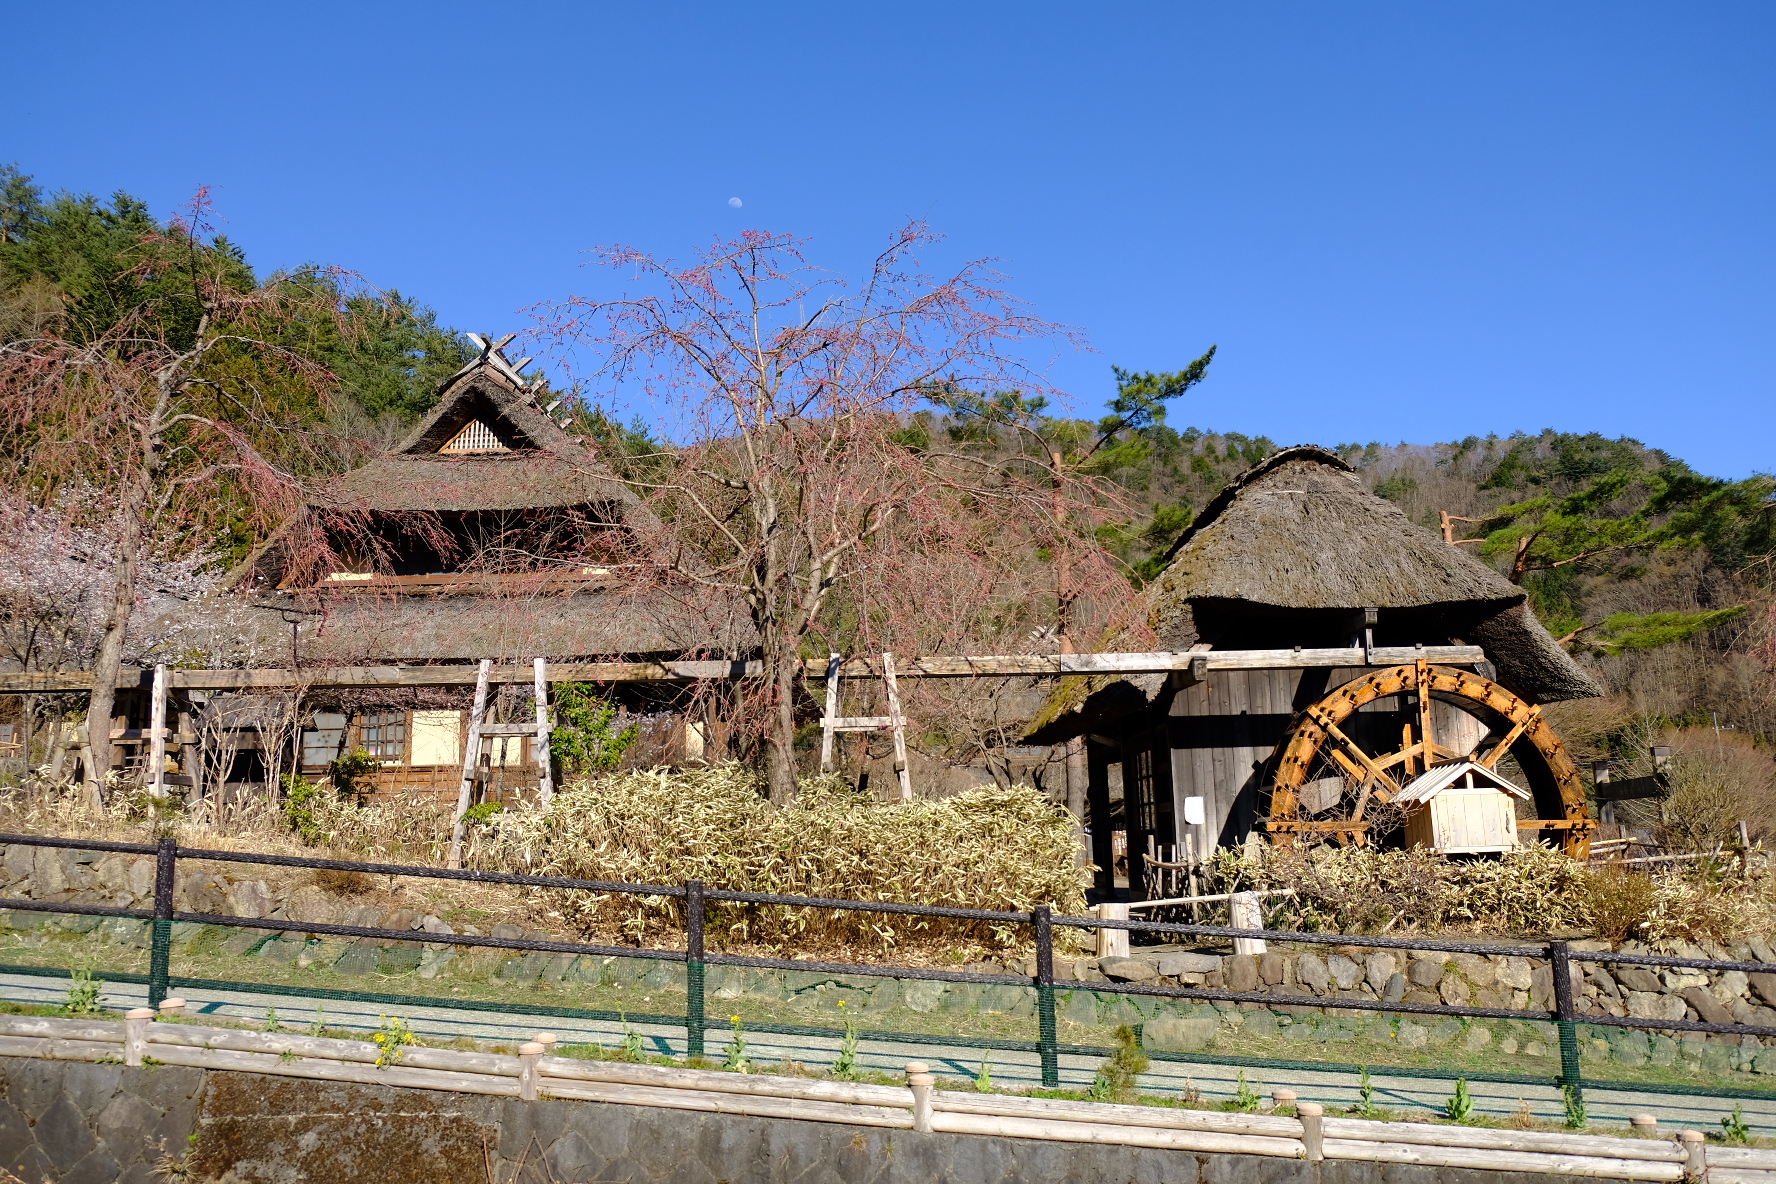 The reconstructed village of Iyashi no Sato